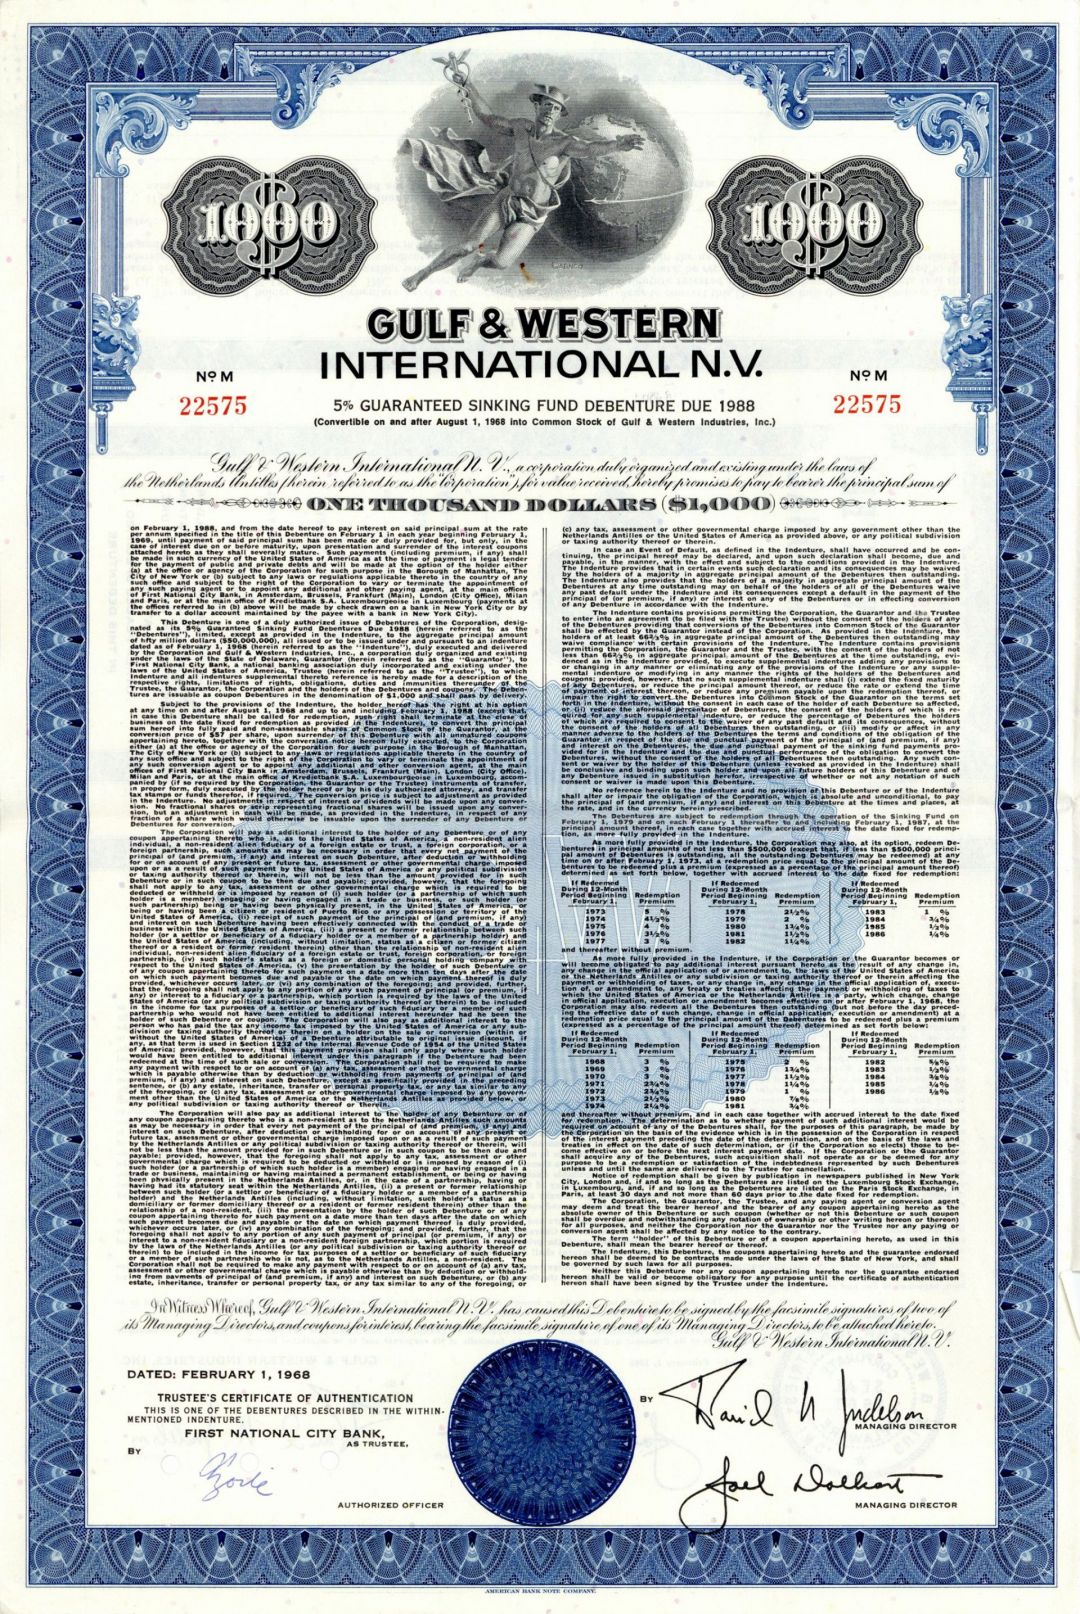 Gulf and Western International N.V. - dated 1968 Netherlands $1,000 Sinking Fund Bond